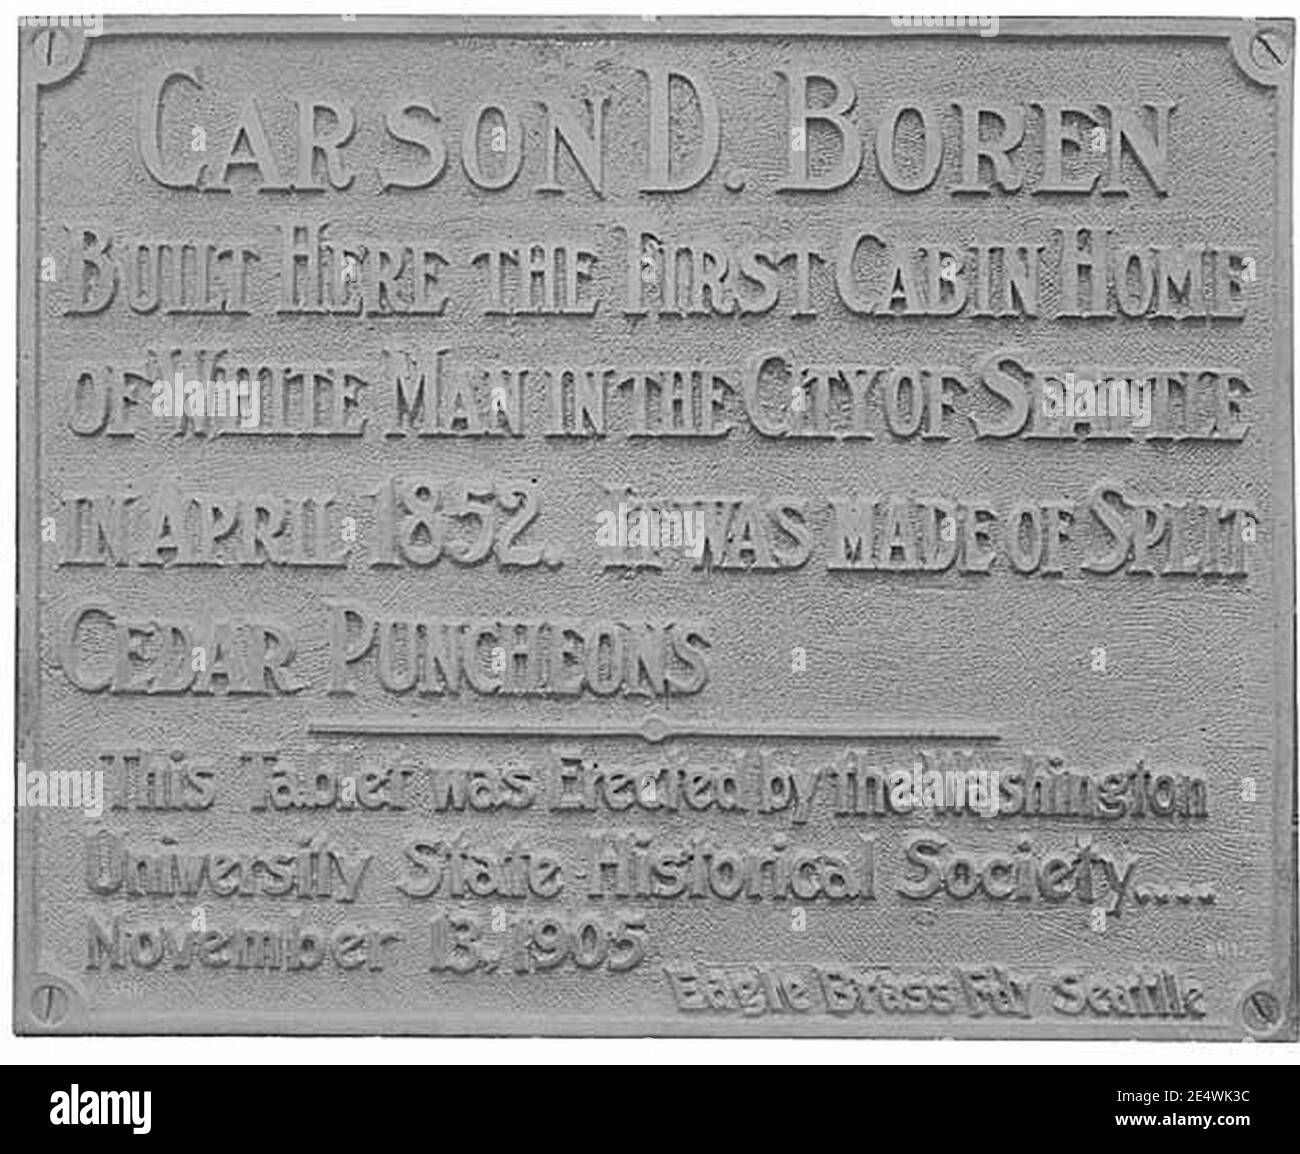 Memorial tablet for Carson D Boren, probably in Seattle, ca 1905 (PEISER 127). Stock Photo